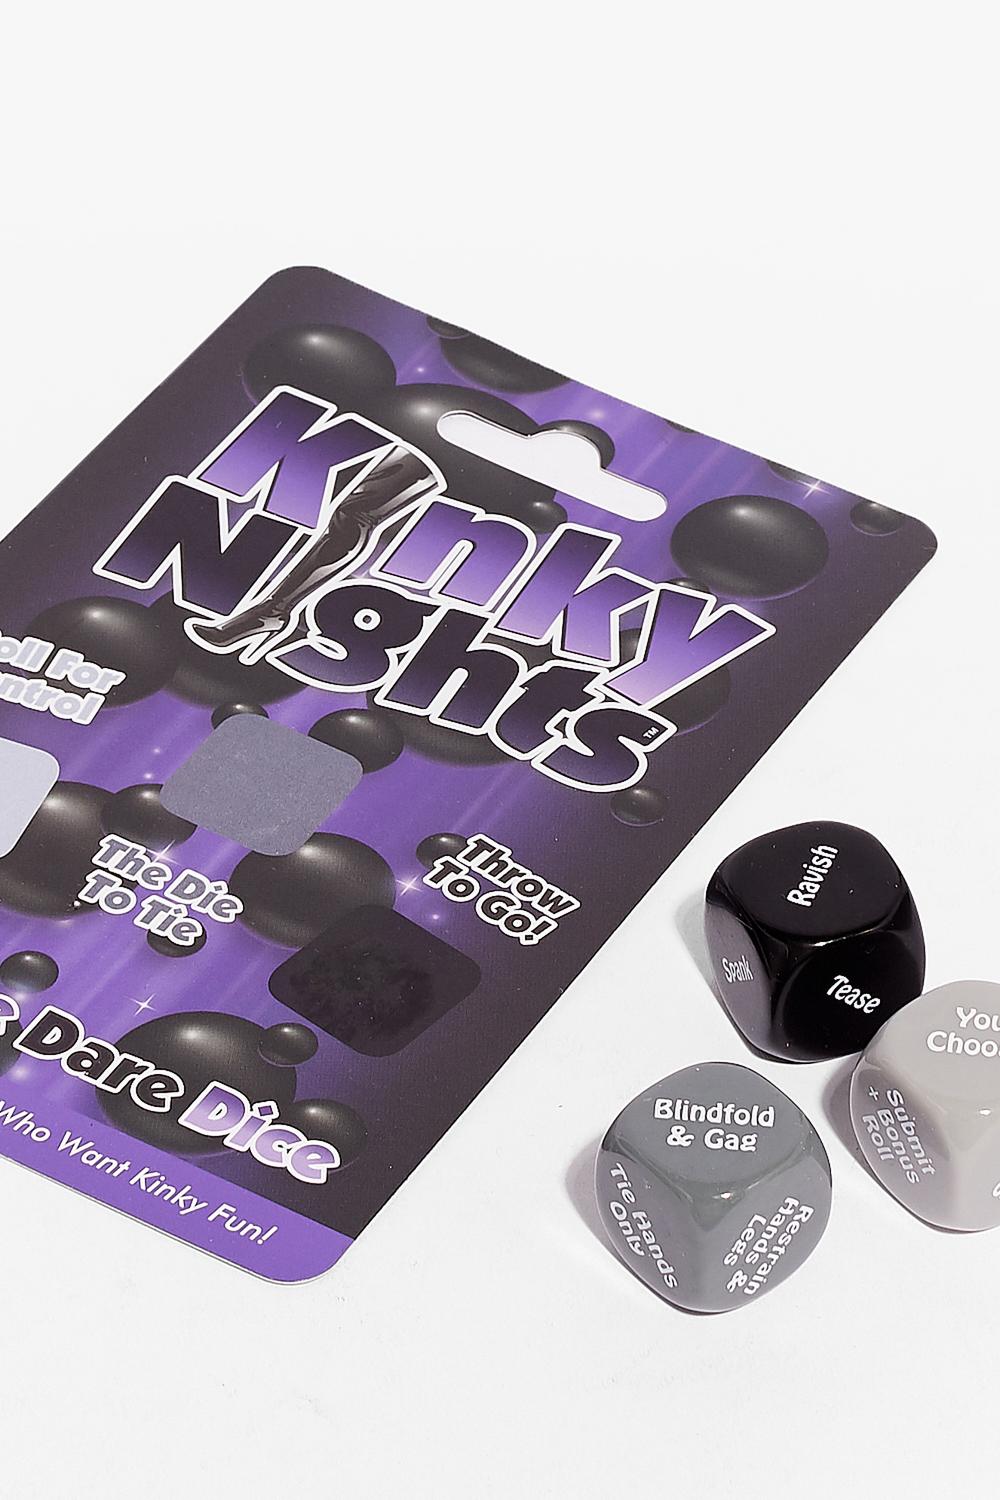 Kinky Nights 3 Piece Bondage Dice Board Game Set